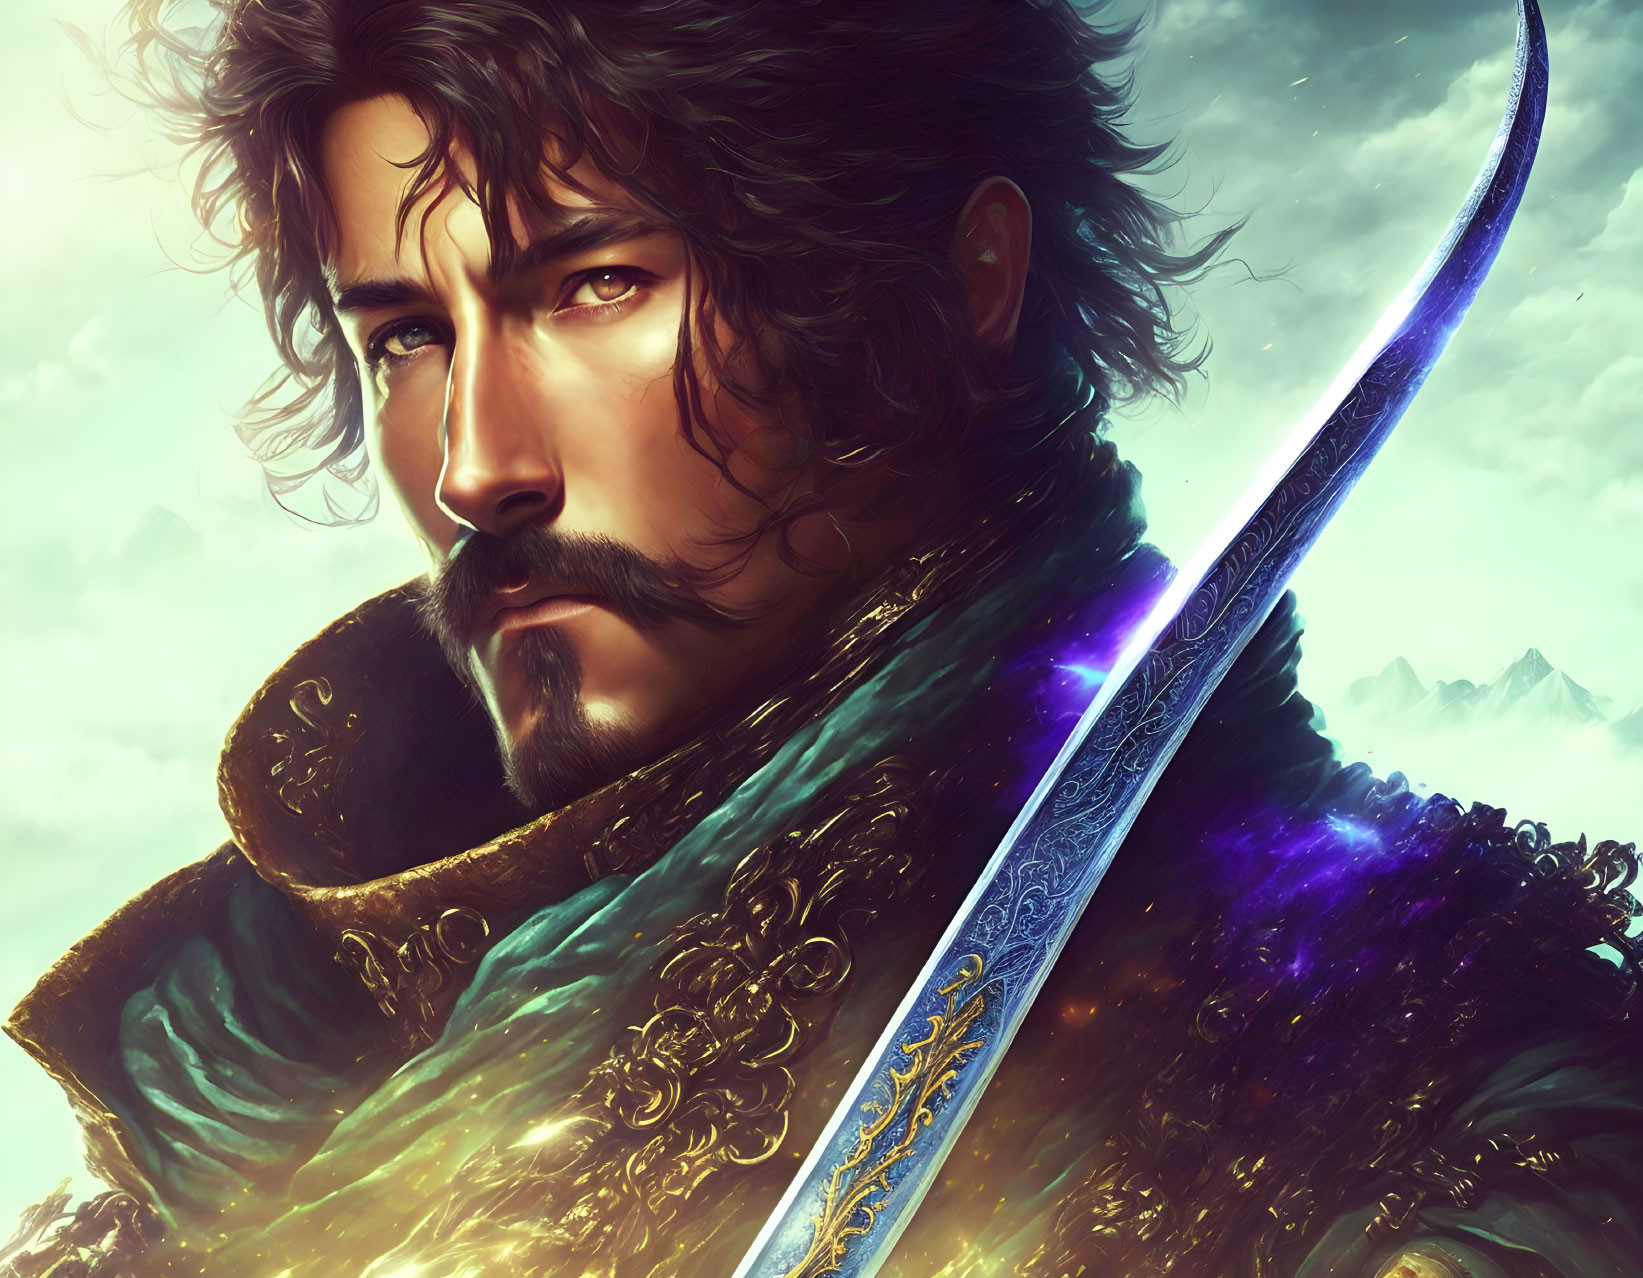 Fantasy warrior digital art: Bearded warrior with glowing sword in detailed armor.